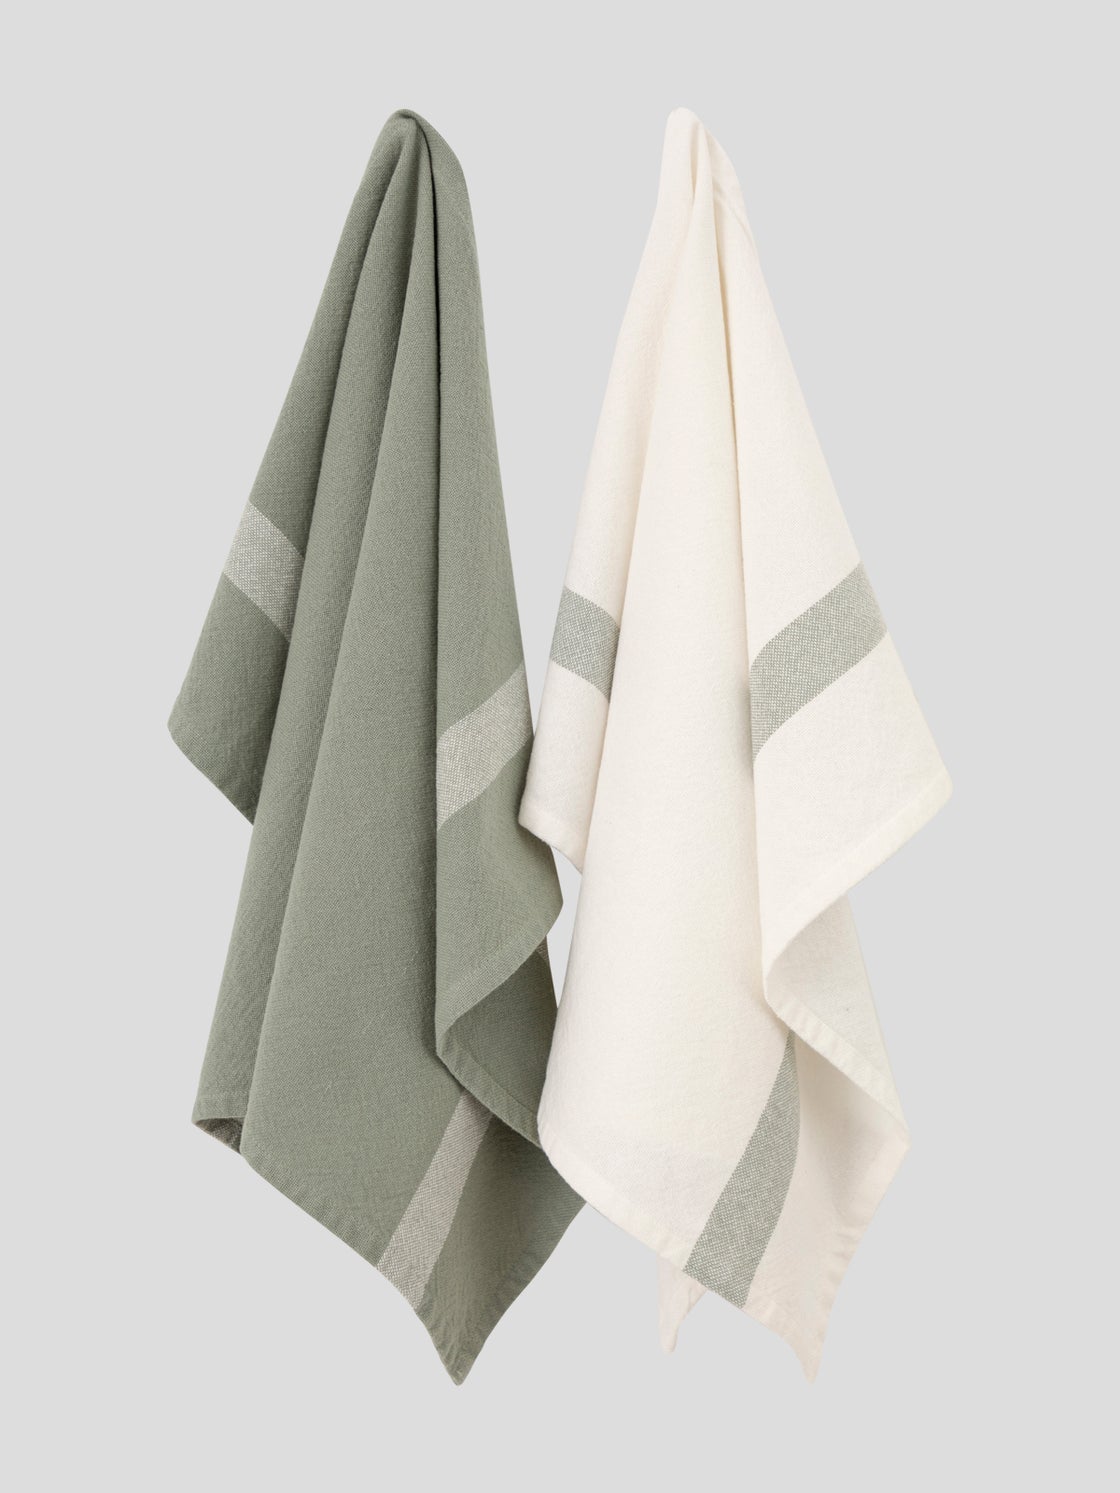 Grey, White, Green Striped Tea Towel Set, Set of 2 Tea towels